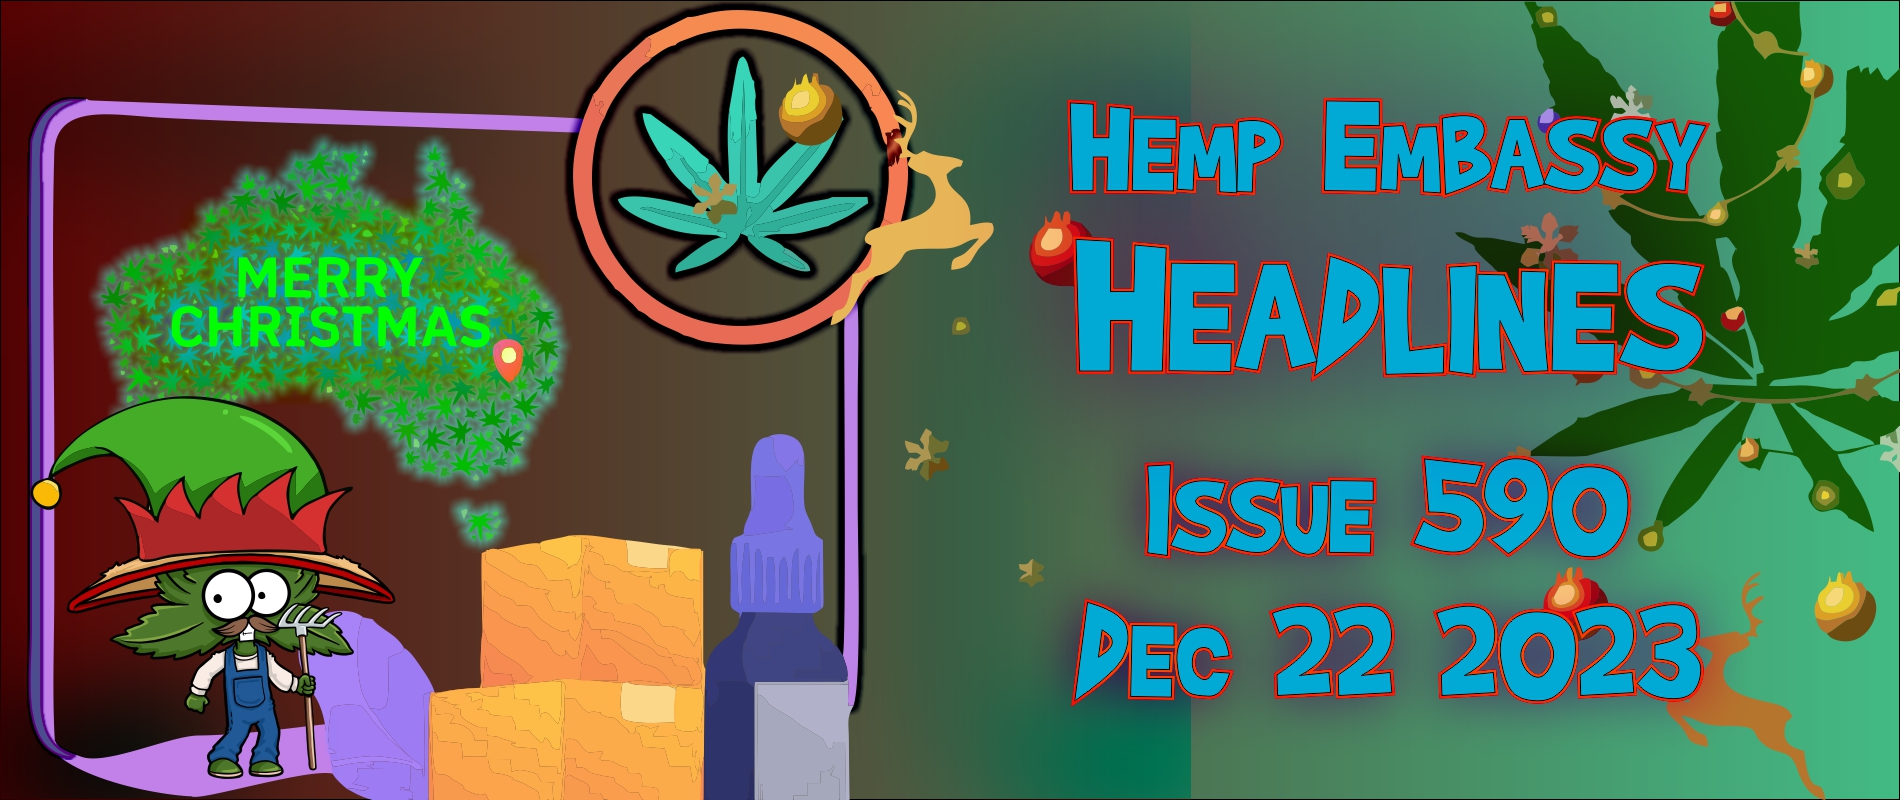 Hemp Embassy Headlines Issue 590 Dec 22 2023